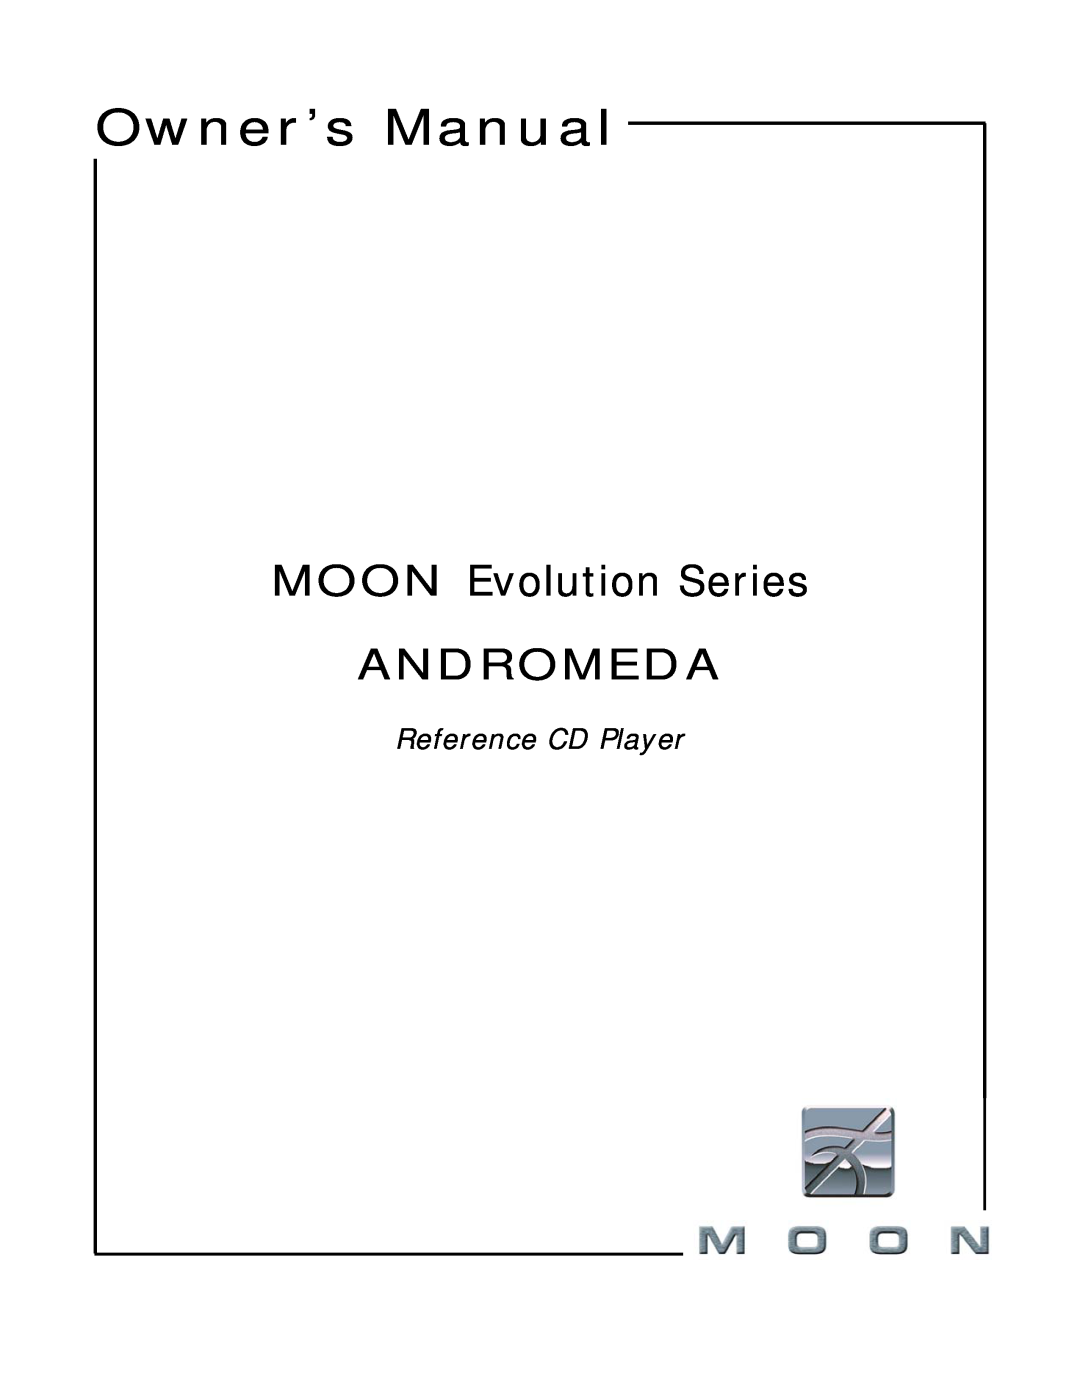 Simaudio owner manual MOON Evolution Series ANDROMEDA, Reference CD Player 